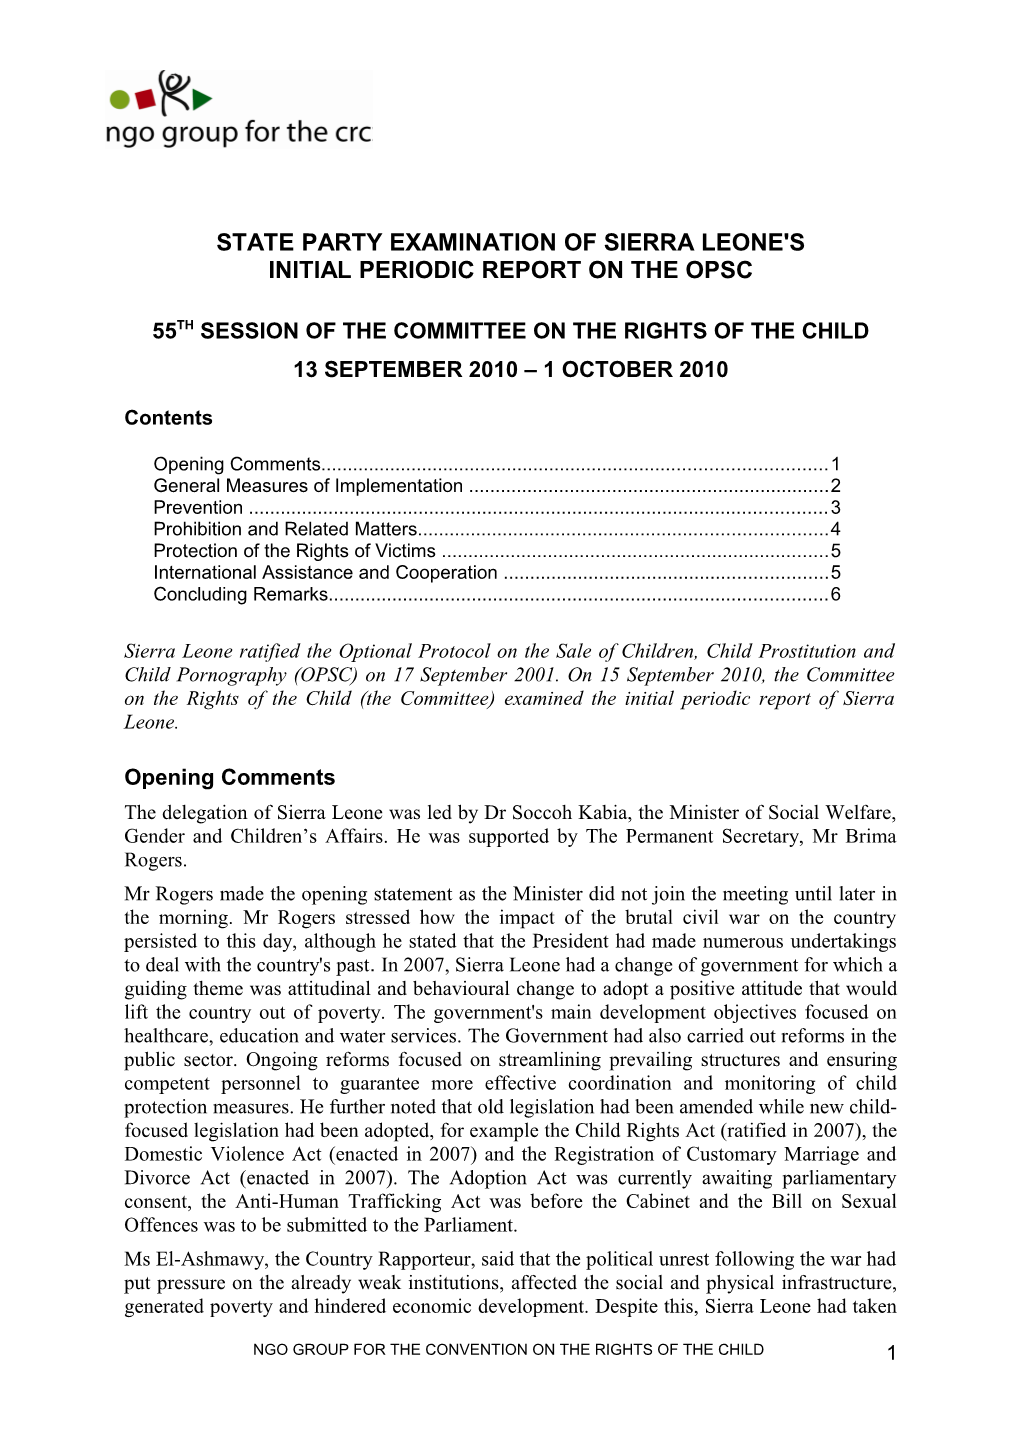 State Party Examination of Bulgaria's